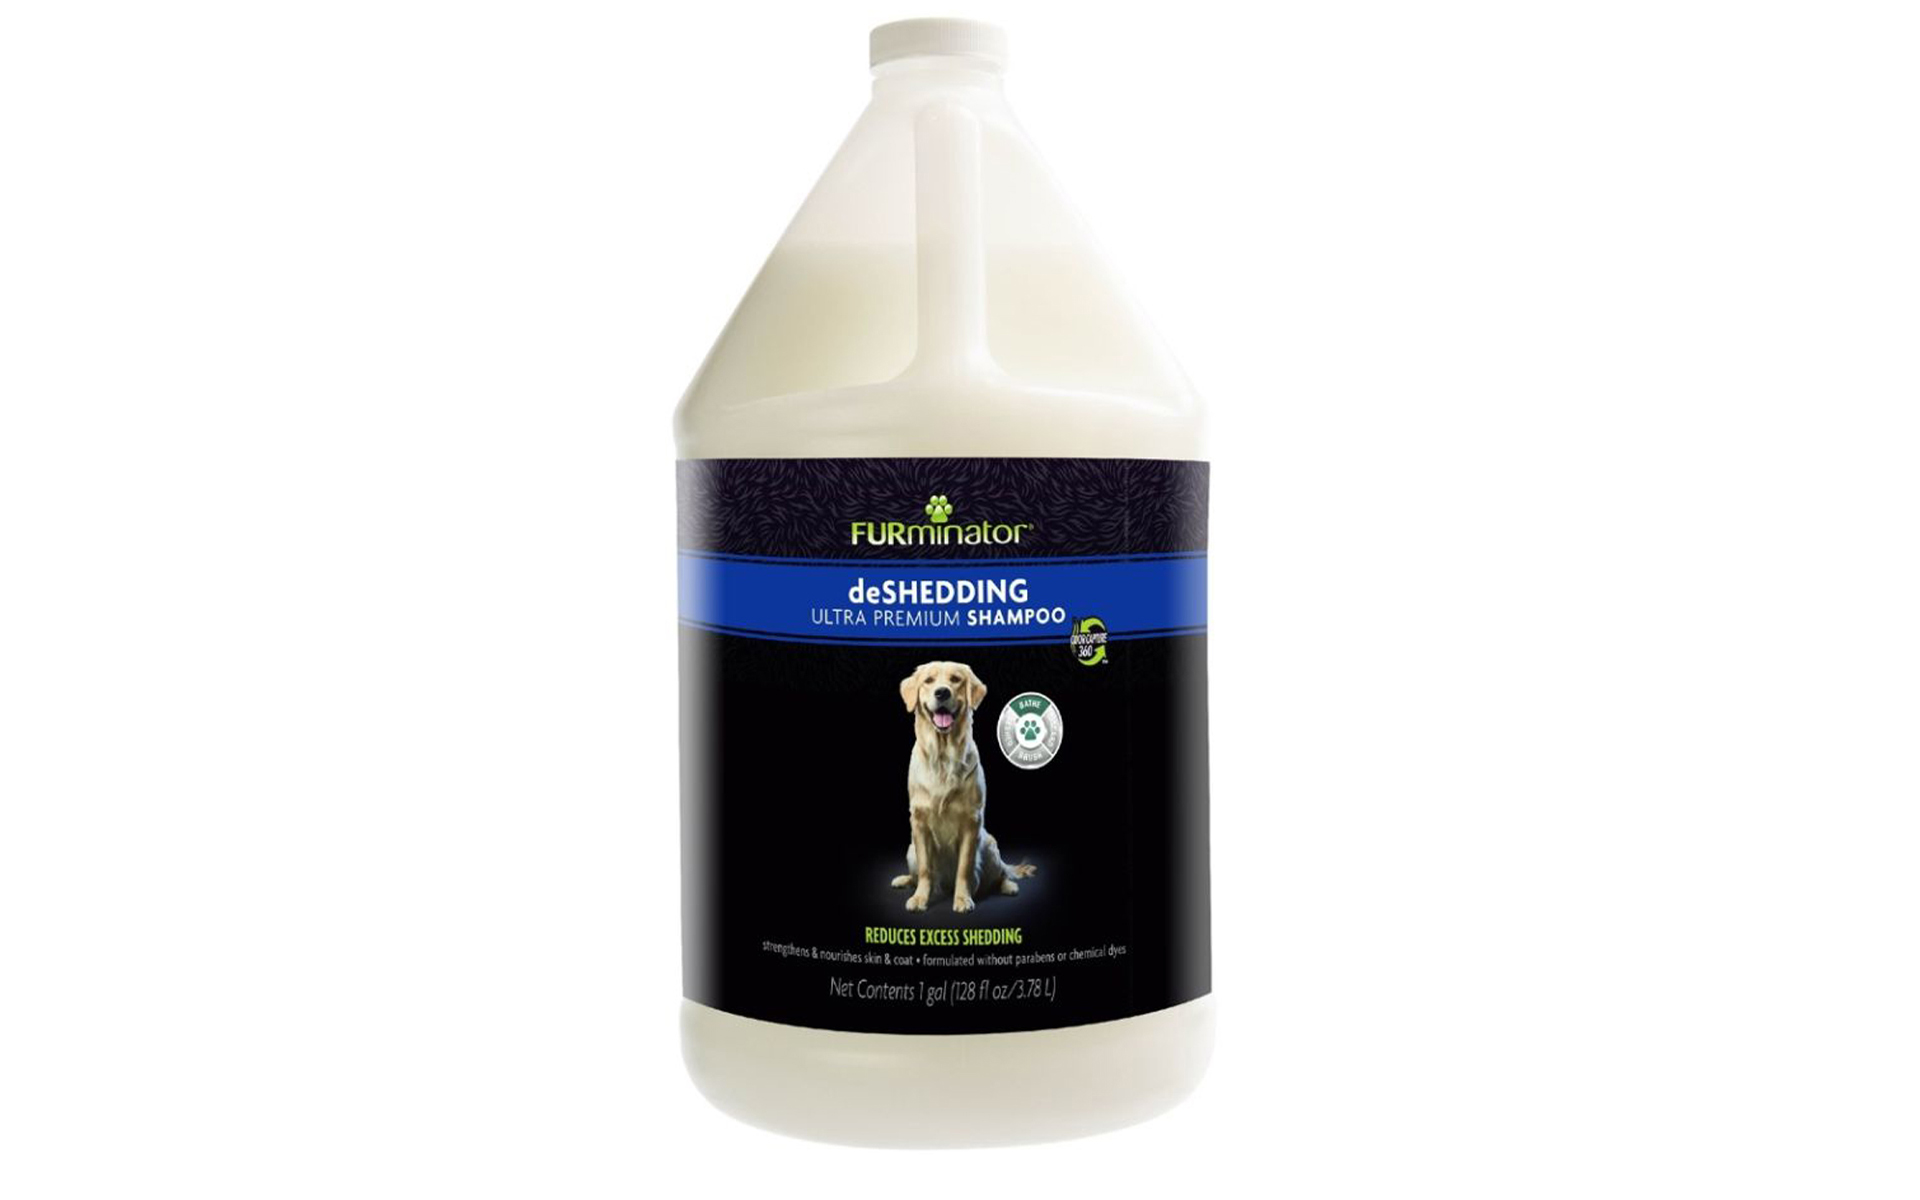 deShedding Ultra Premium Shampoo for Dogs, 1 Gallon